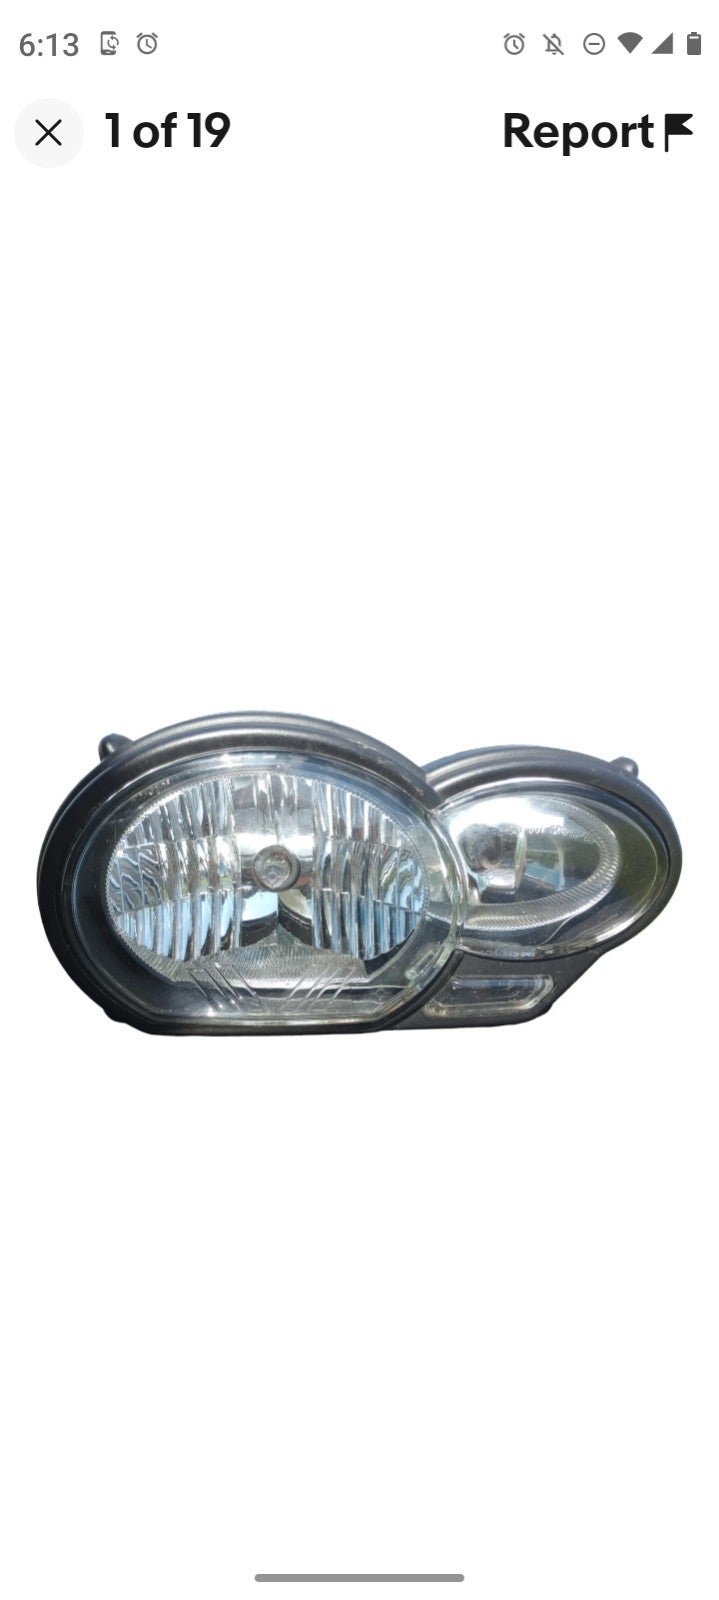 05-13 BMW R1200GS Adventure Headlight Head Lamp Light 6